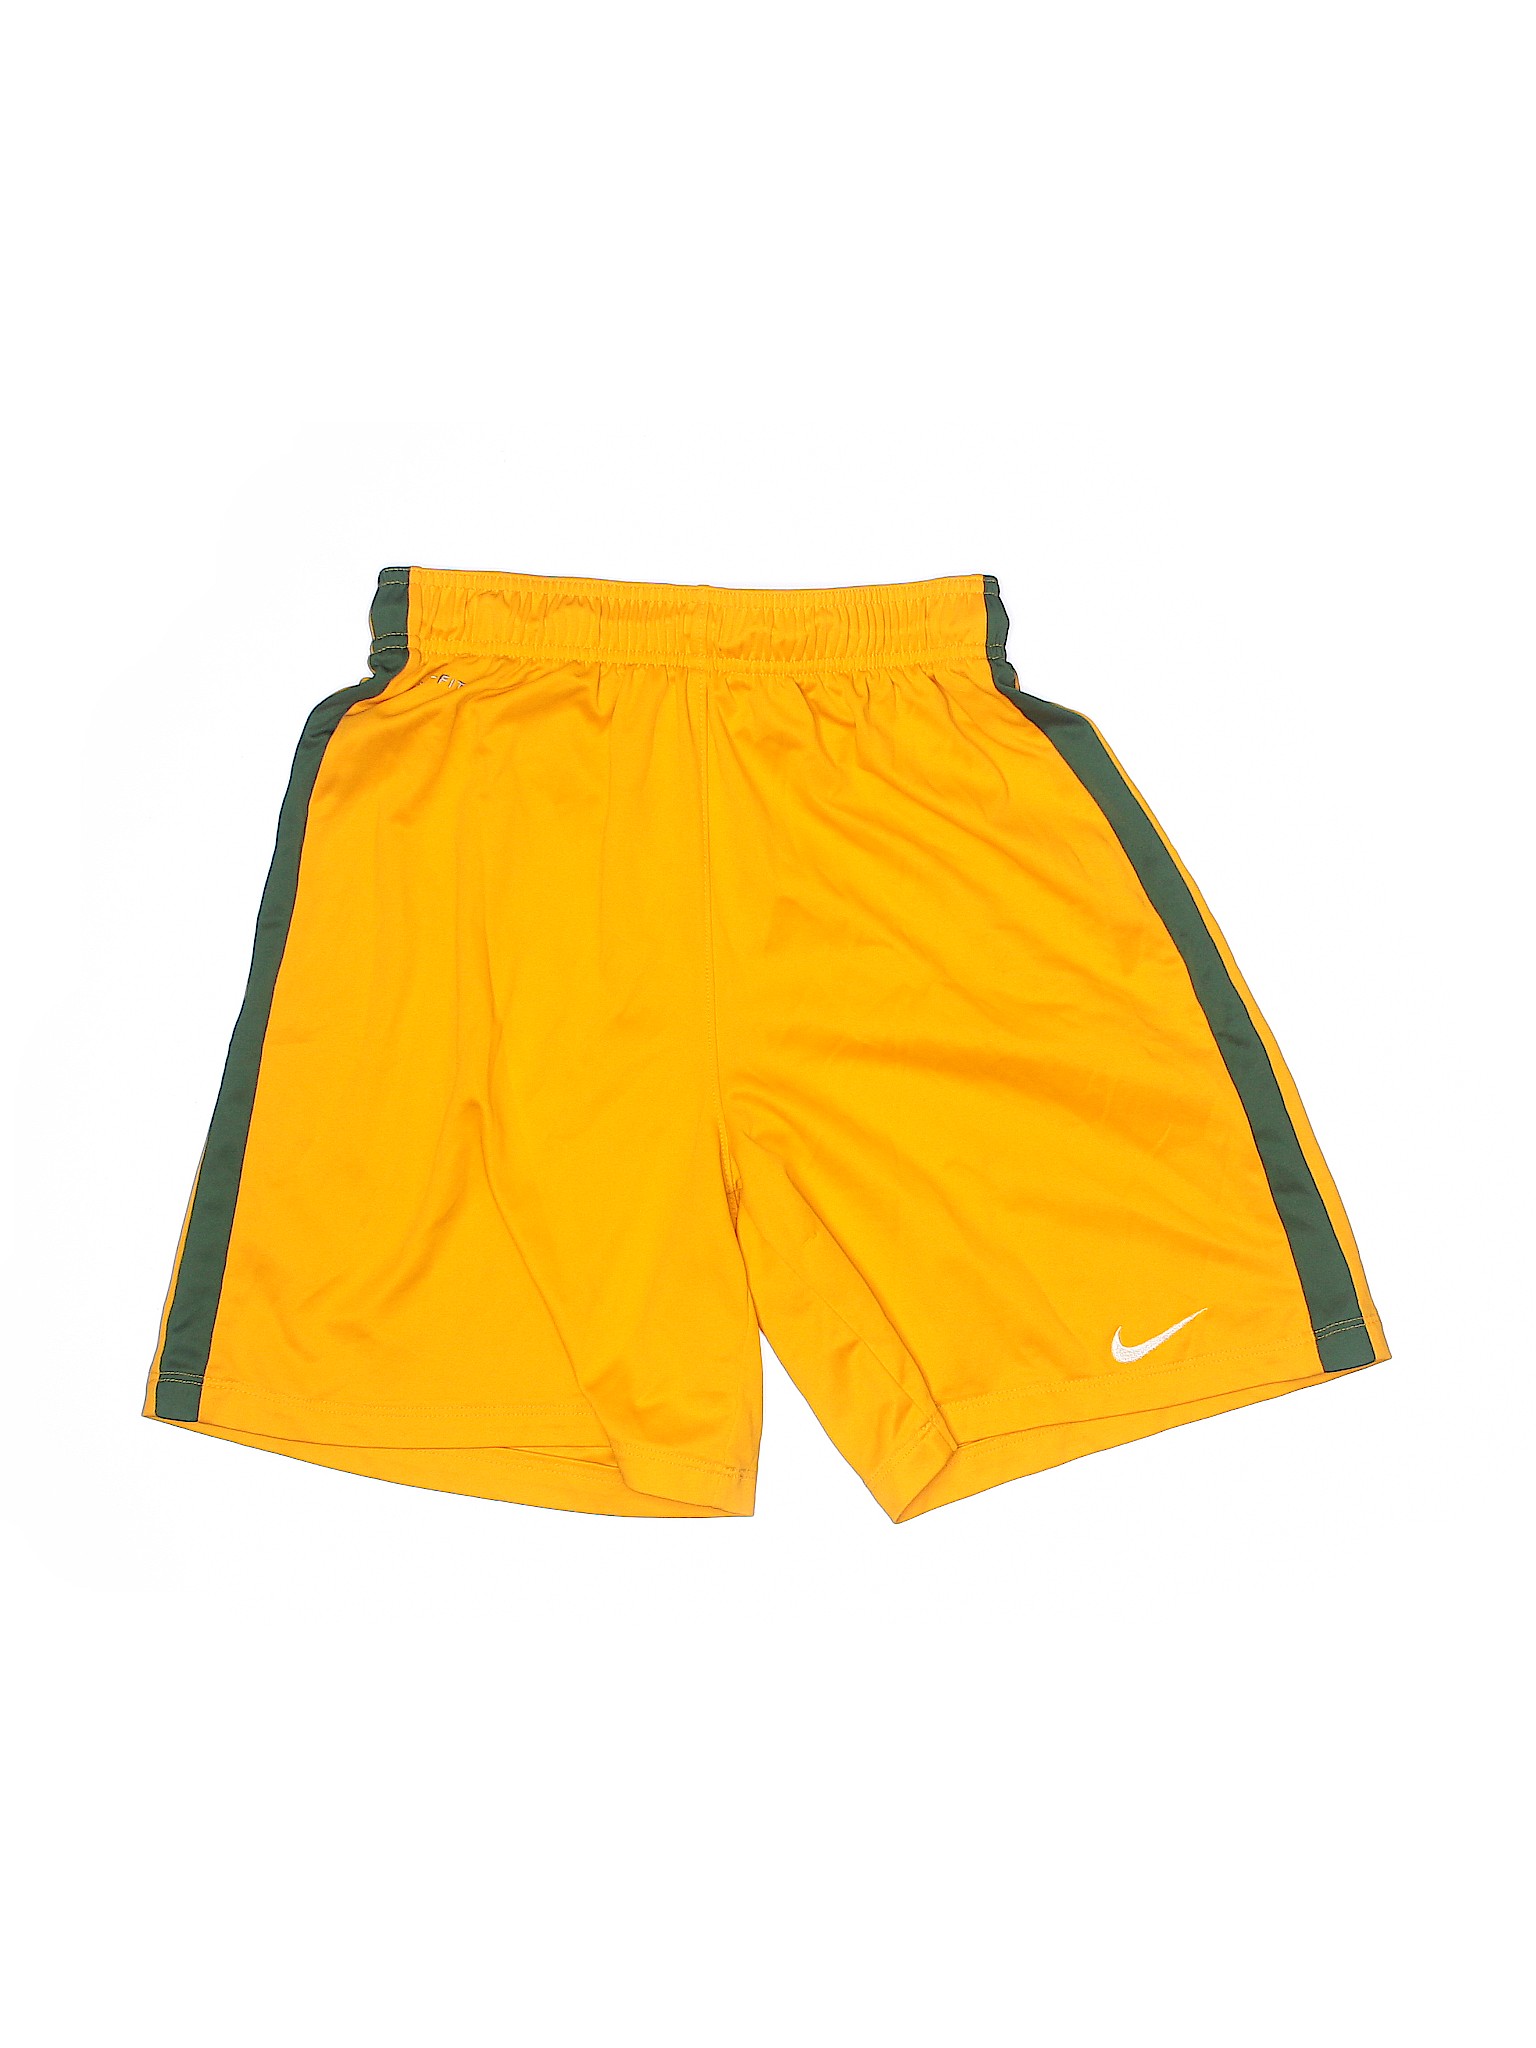 Nike Boys Yellow Athletic Shorts XL Youth | eBay